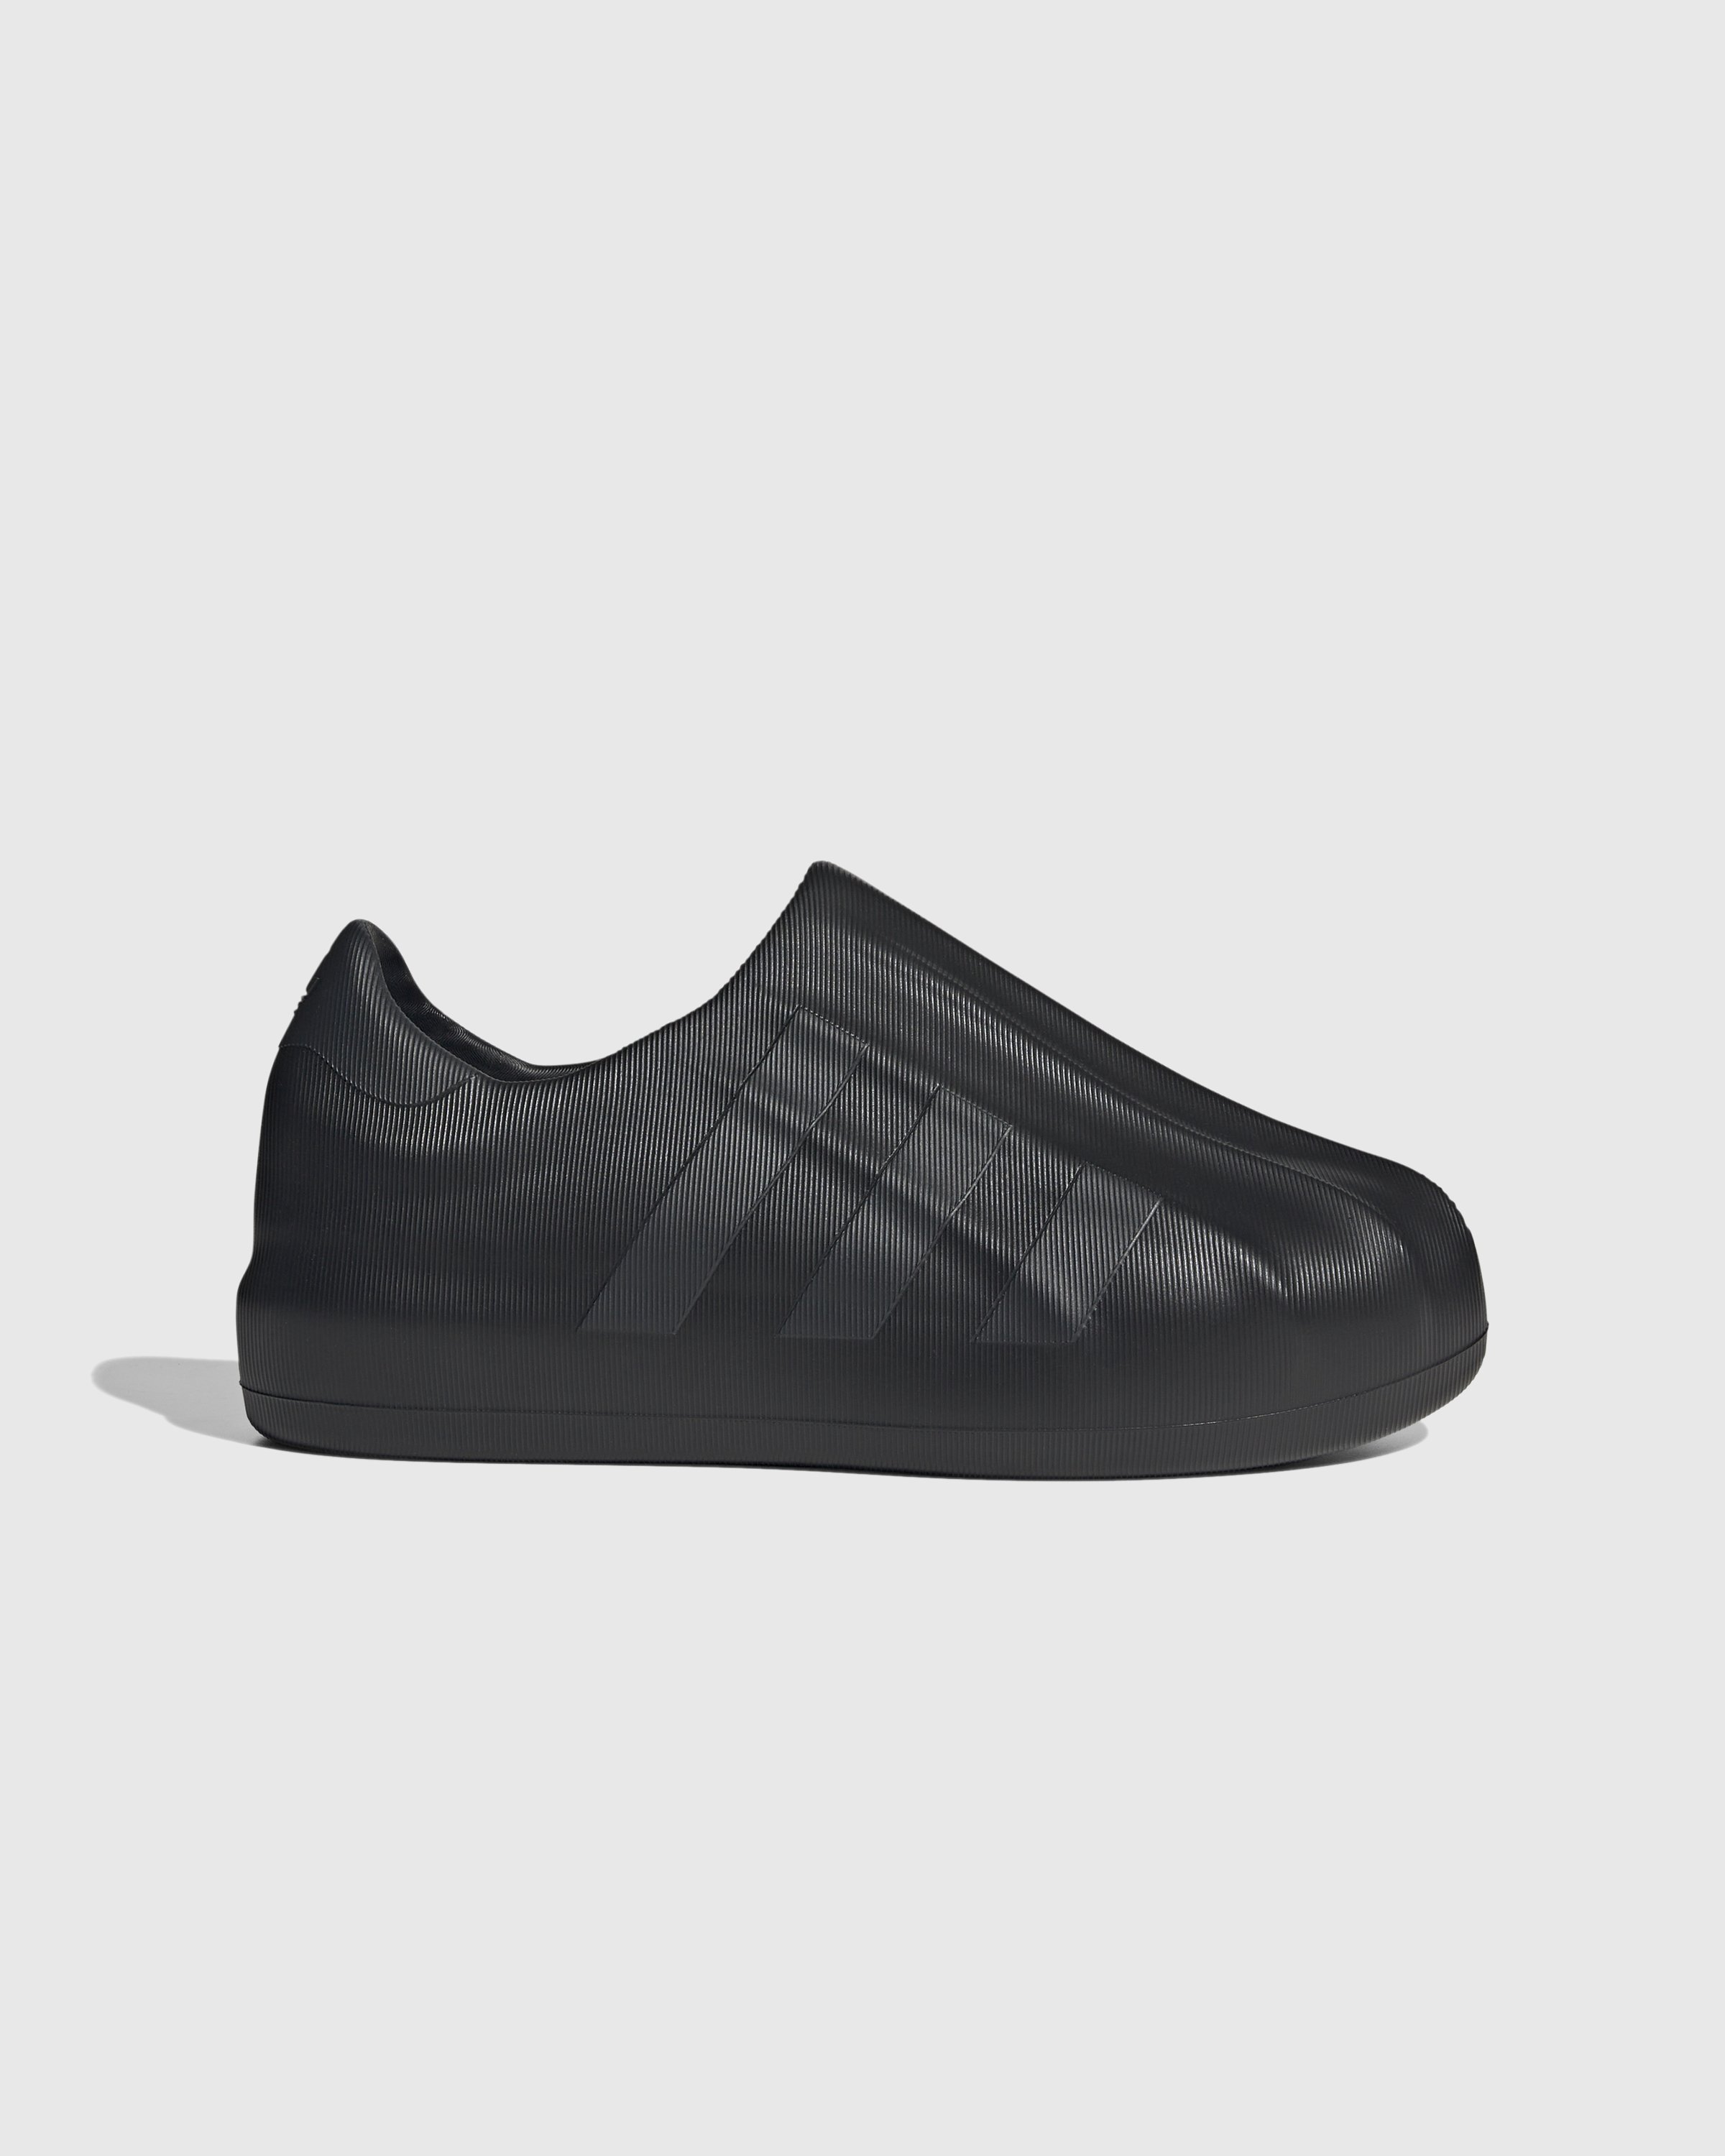 Adidas - Adifom Superstar Black Carbon - Footwear - Black - Image 1